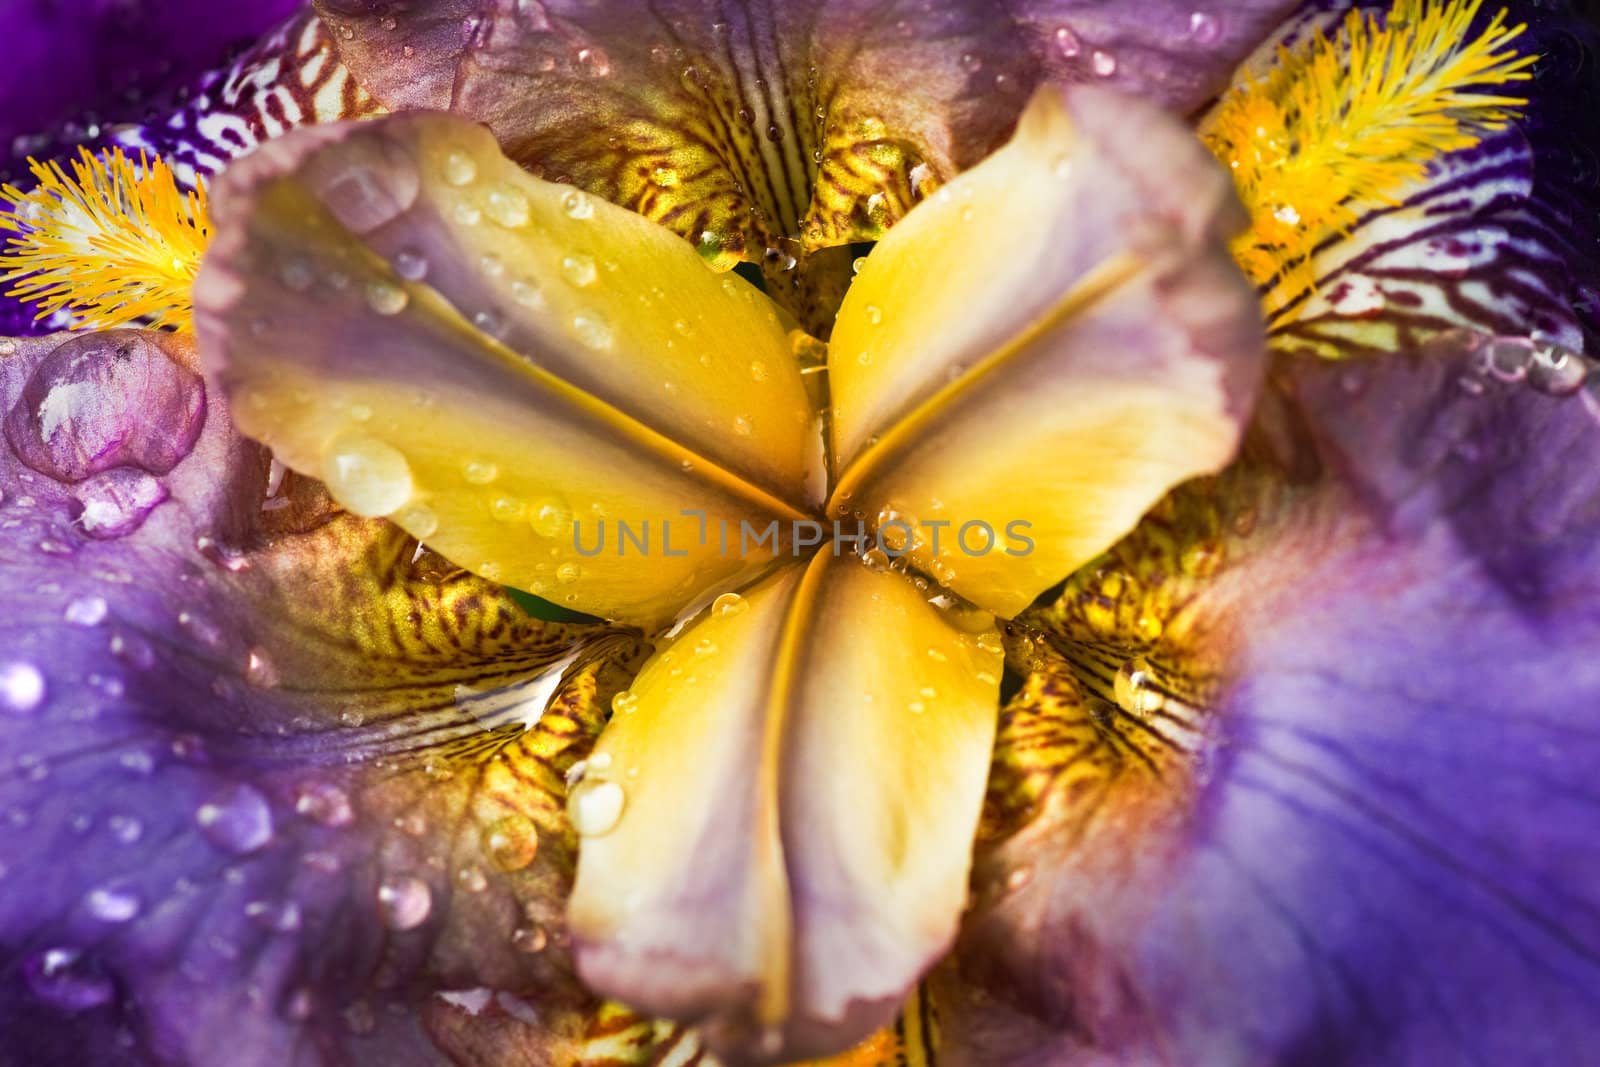 German Iris or Iris germanica  by Colette